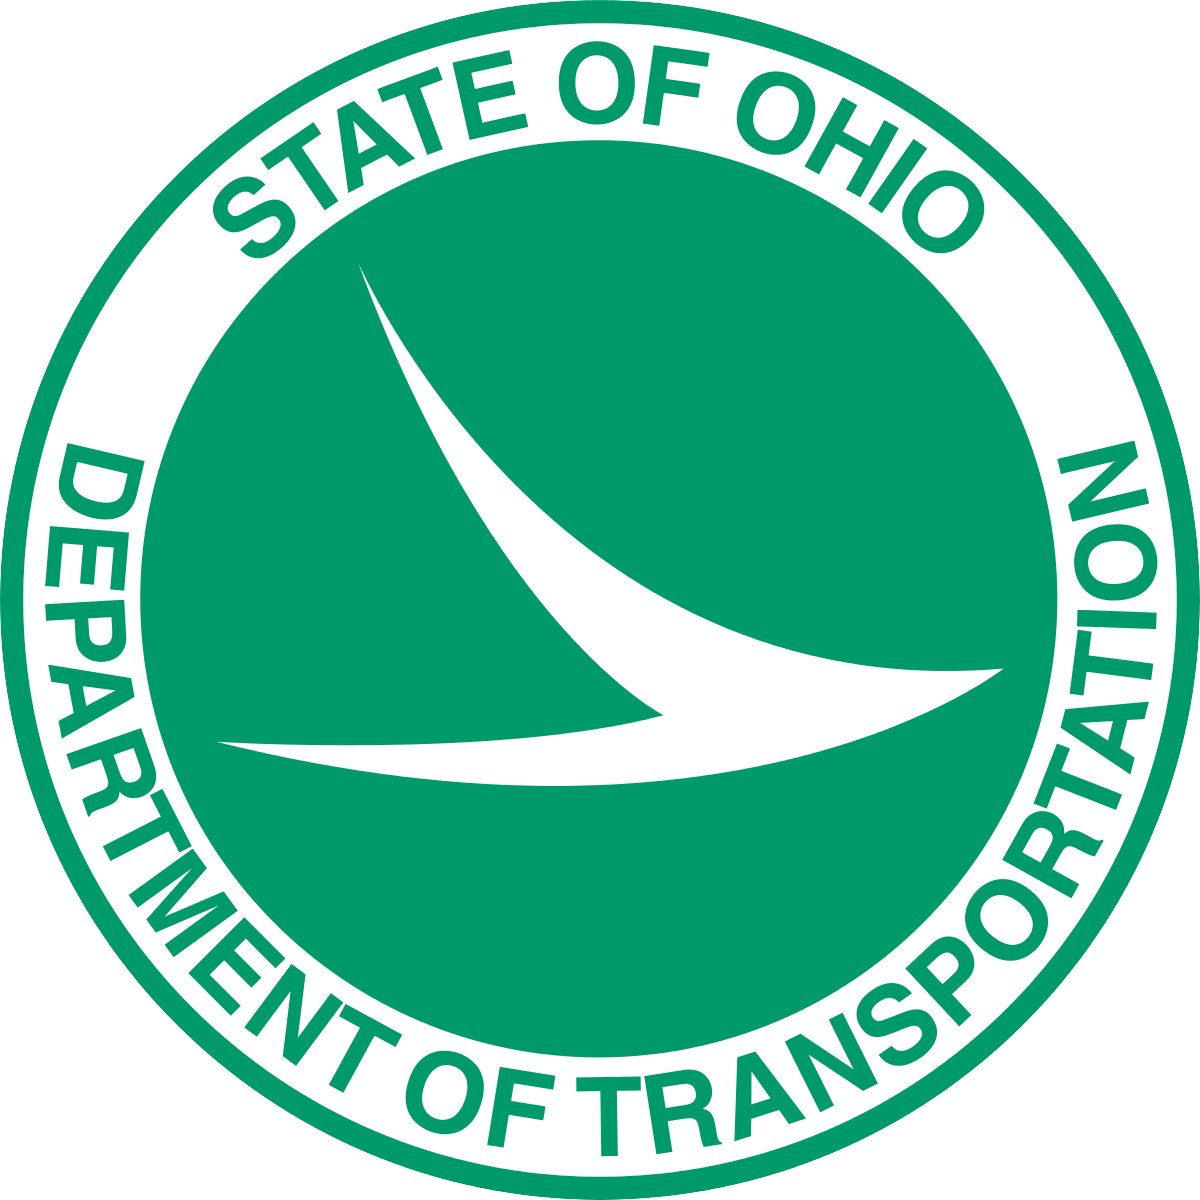 Dept. of transportation logo